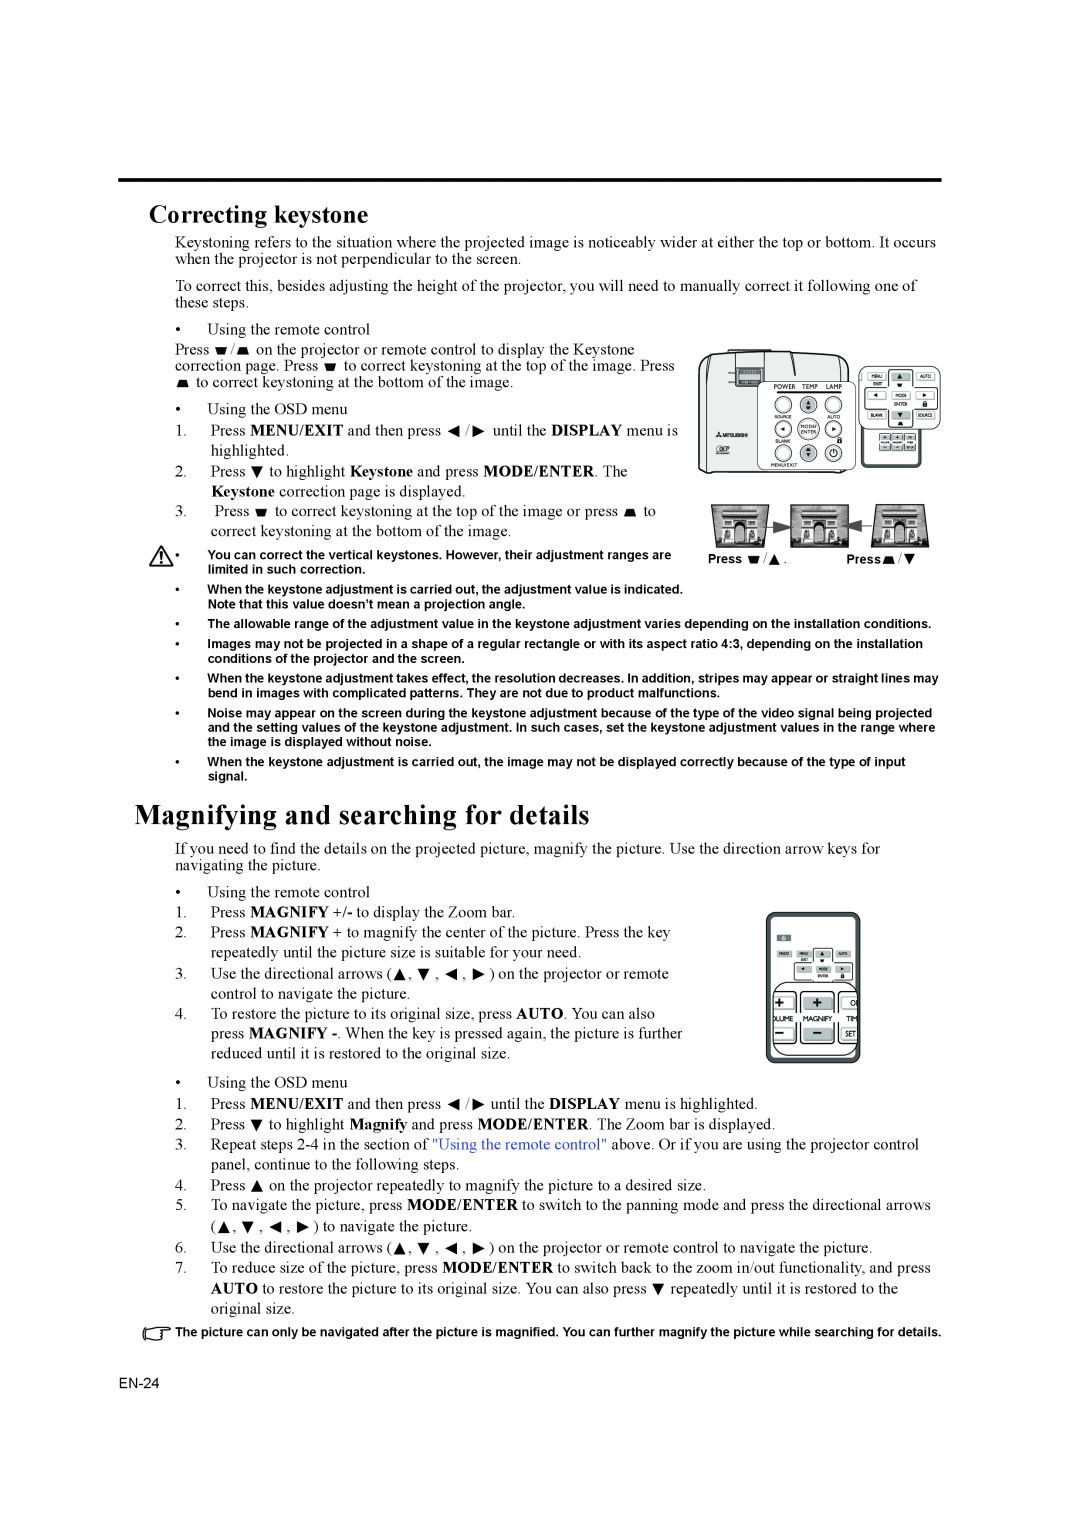 Mitsubishi Electronics EX200U, ES200U user manual Magnifying and searching for details, Correcting keystone 